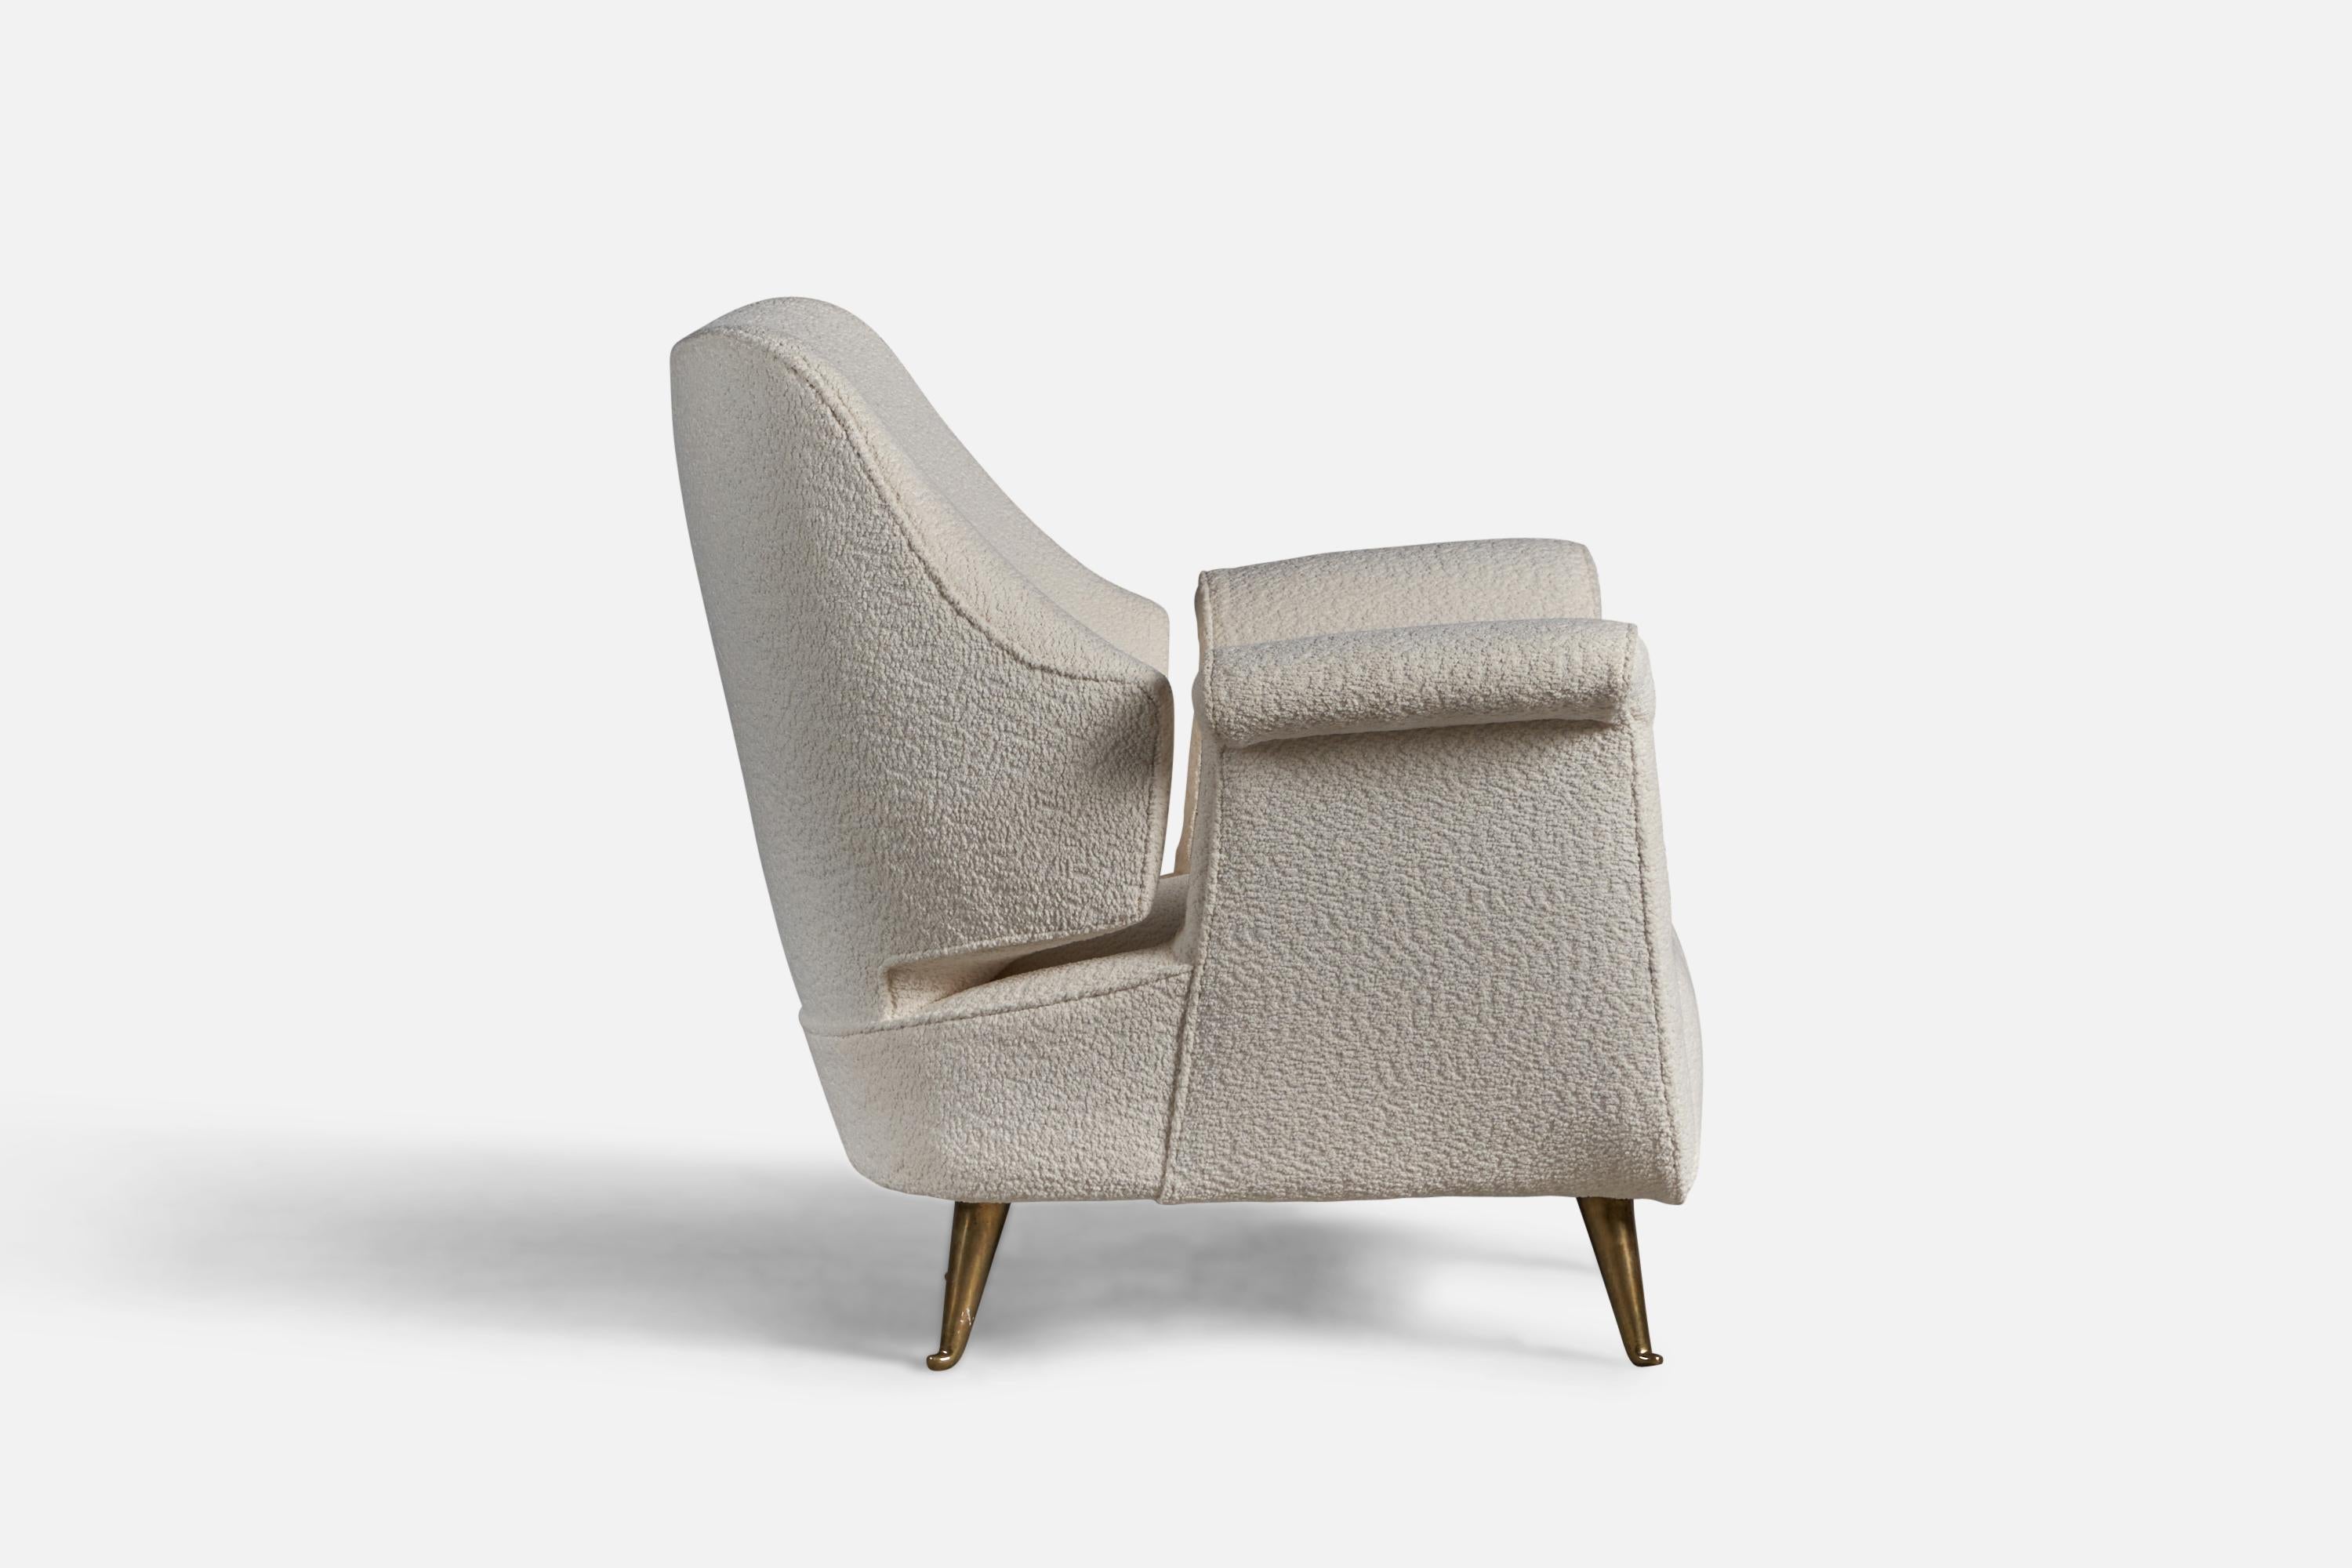 Italian ISA Bergamo, Lounge Chairs, Brass, Fabric, Italy, 1950s For Sale